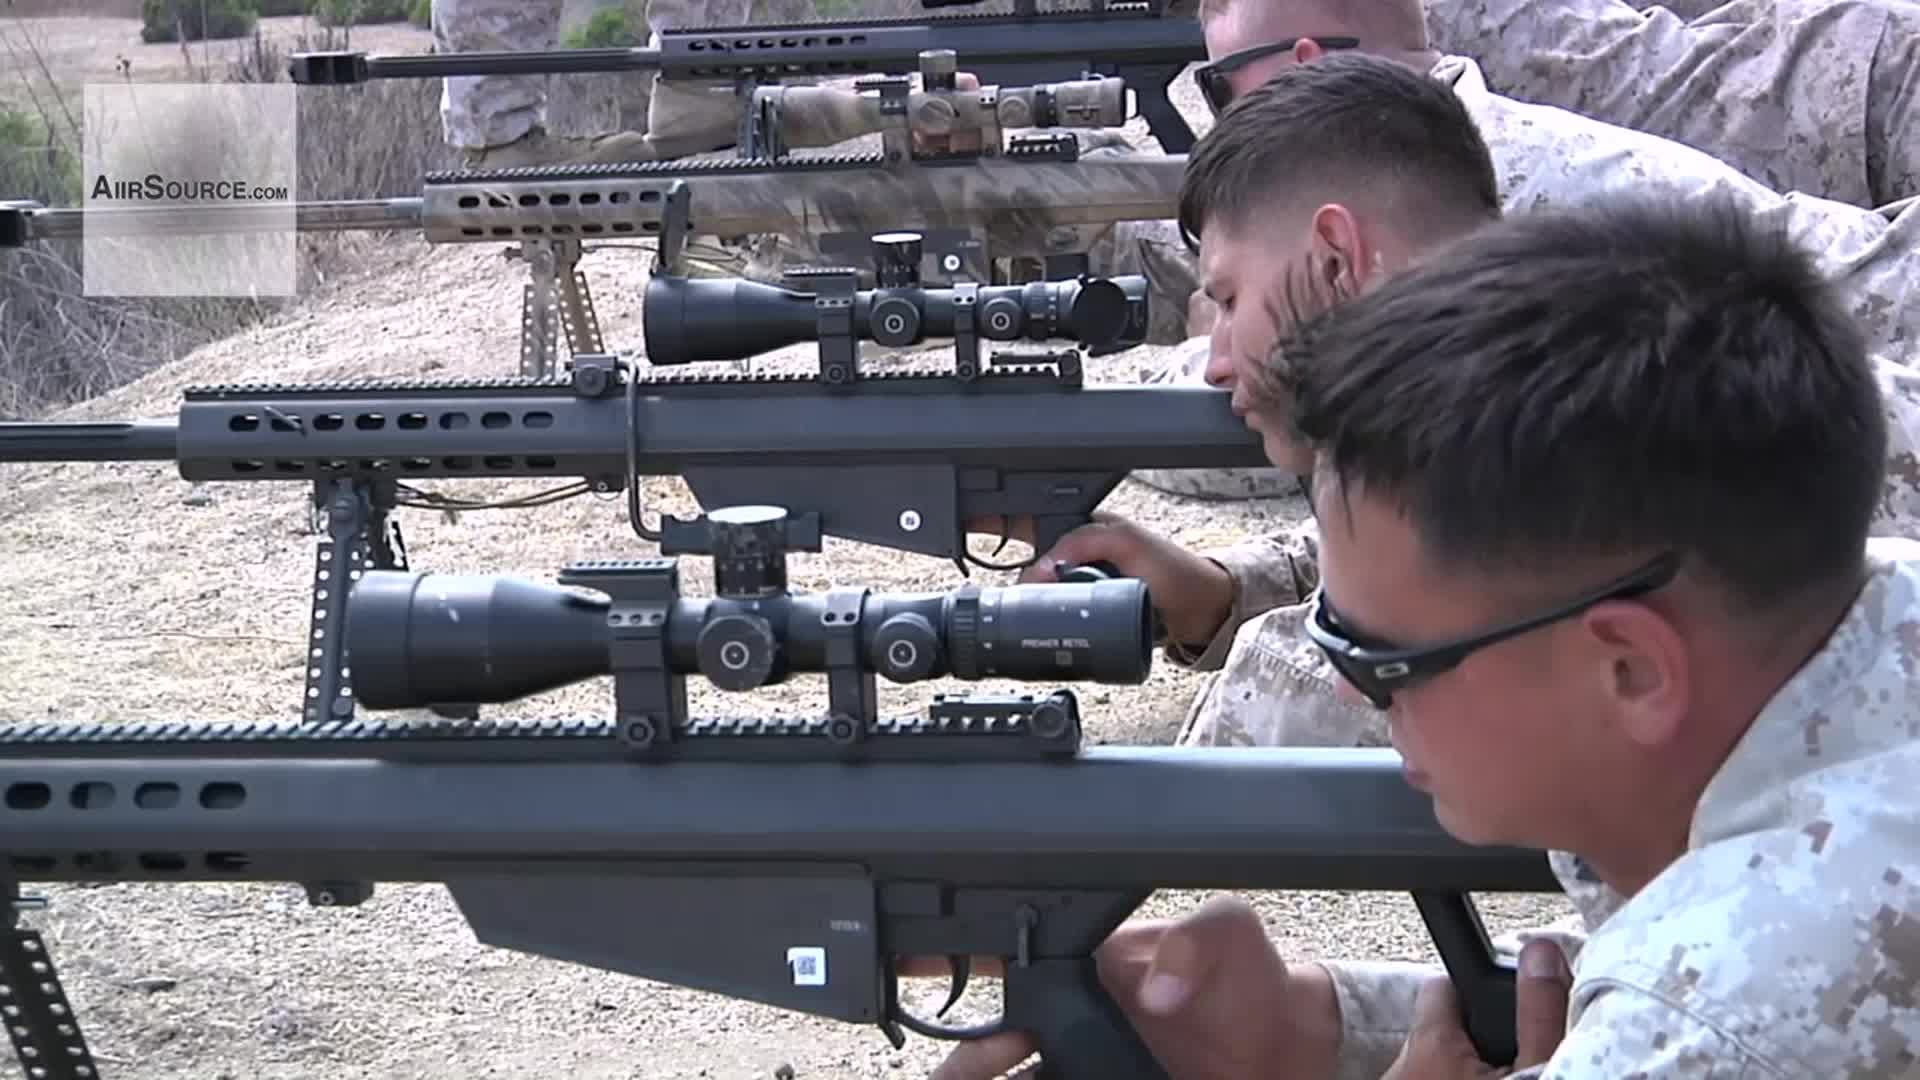 Barrett M82 Sniper Rifle High Quality Background on Wallpapers Vista